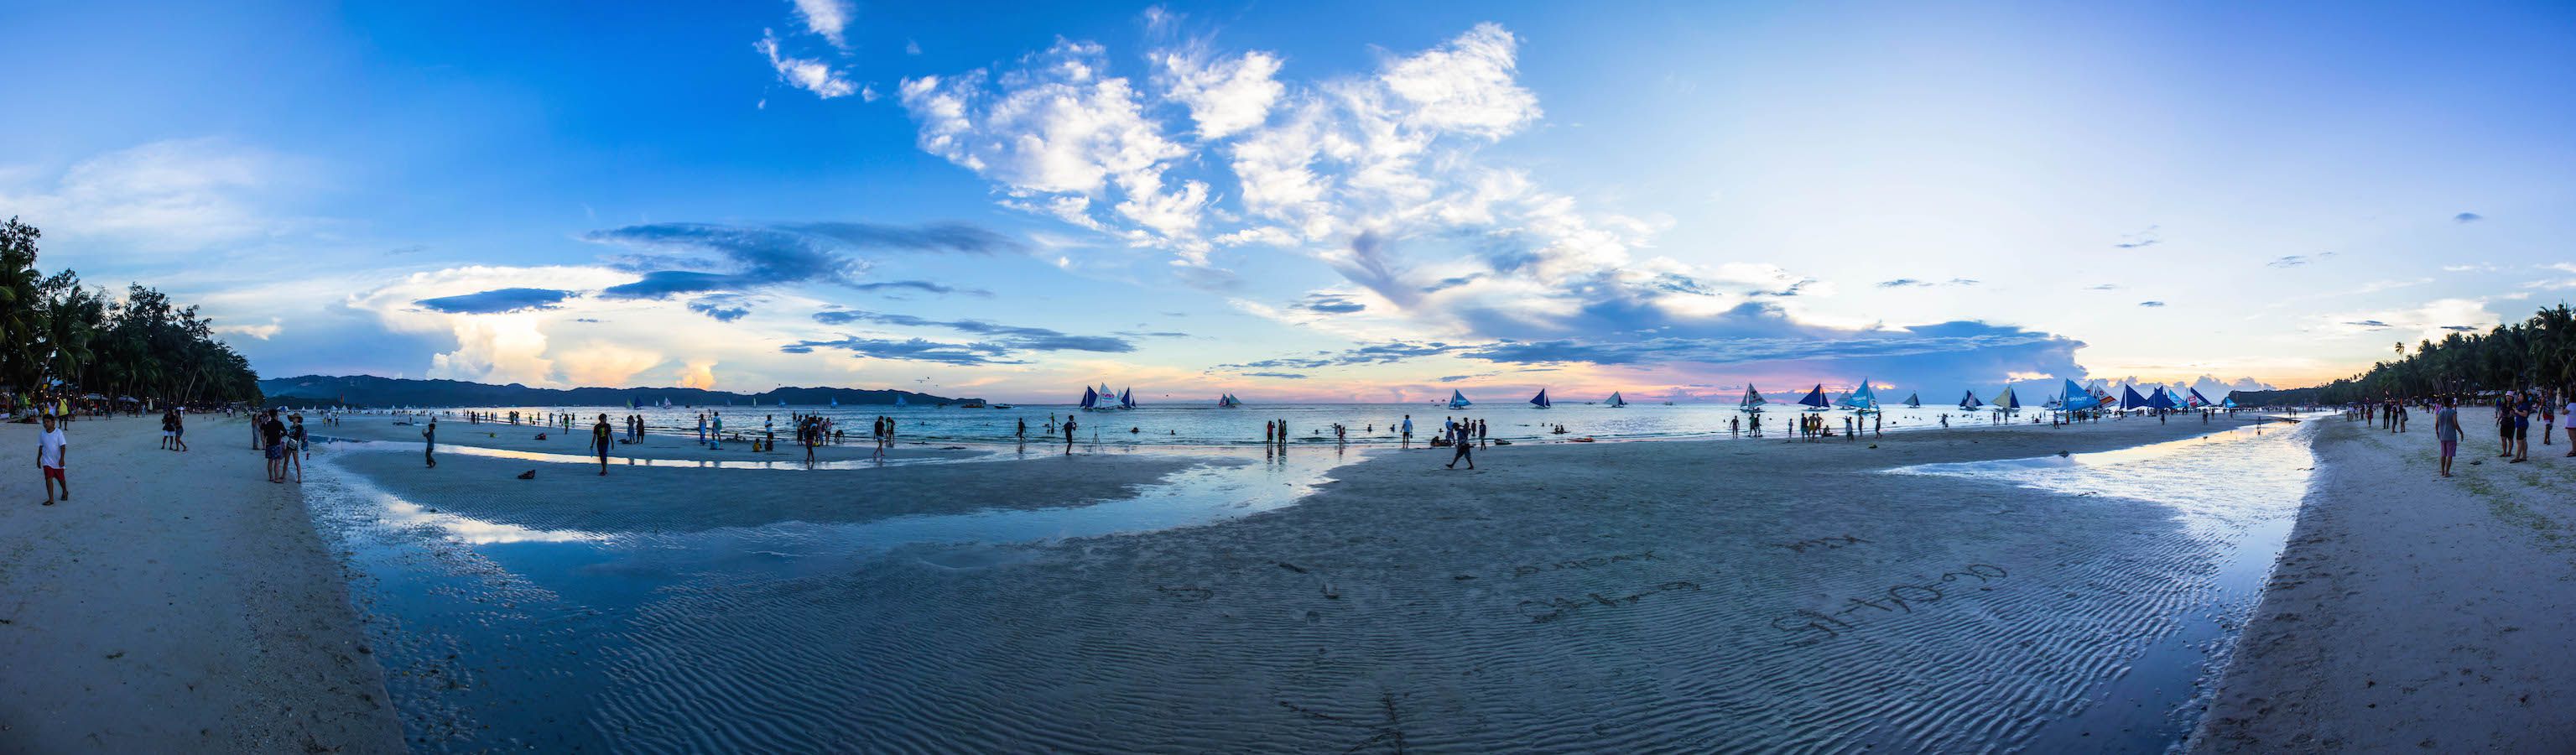 Panoramic view of White Beach in Boracay, Philippines